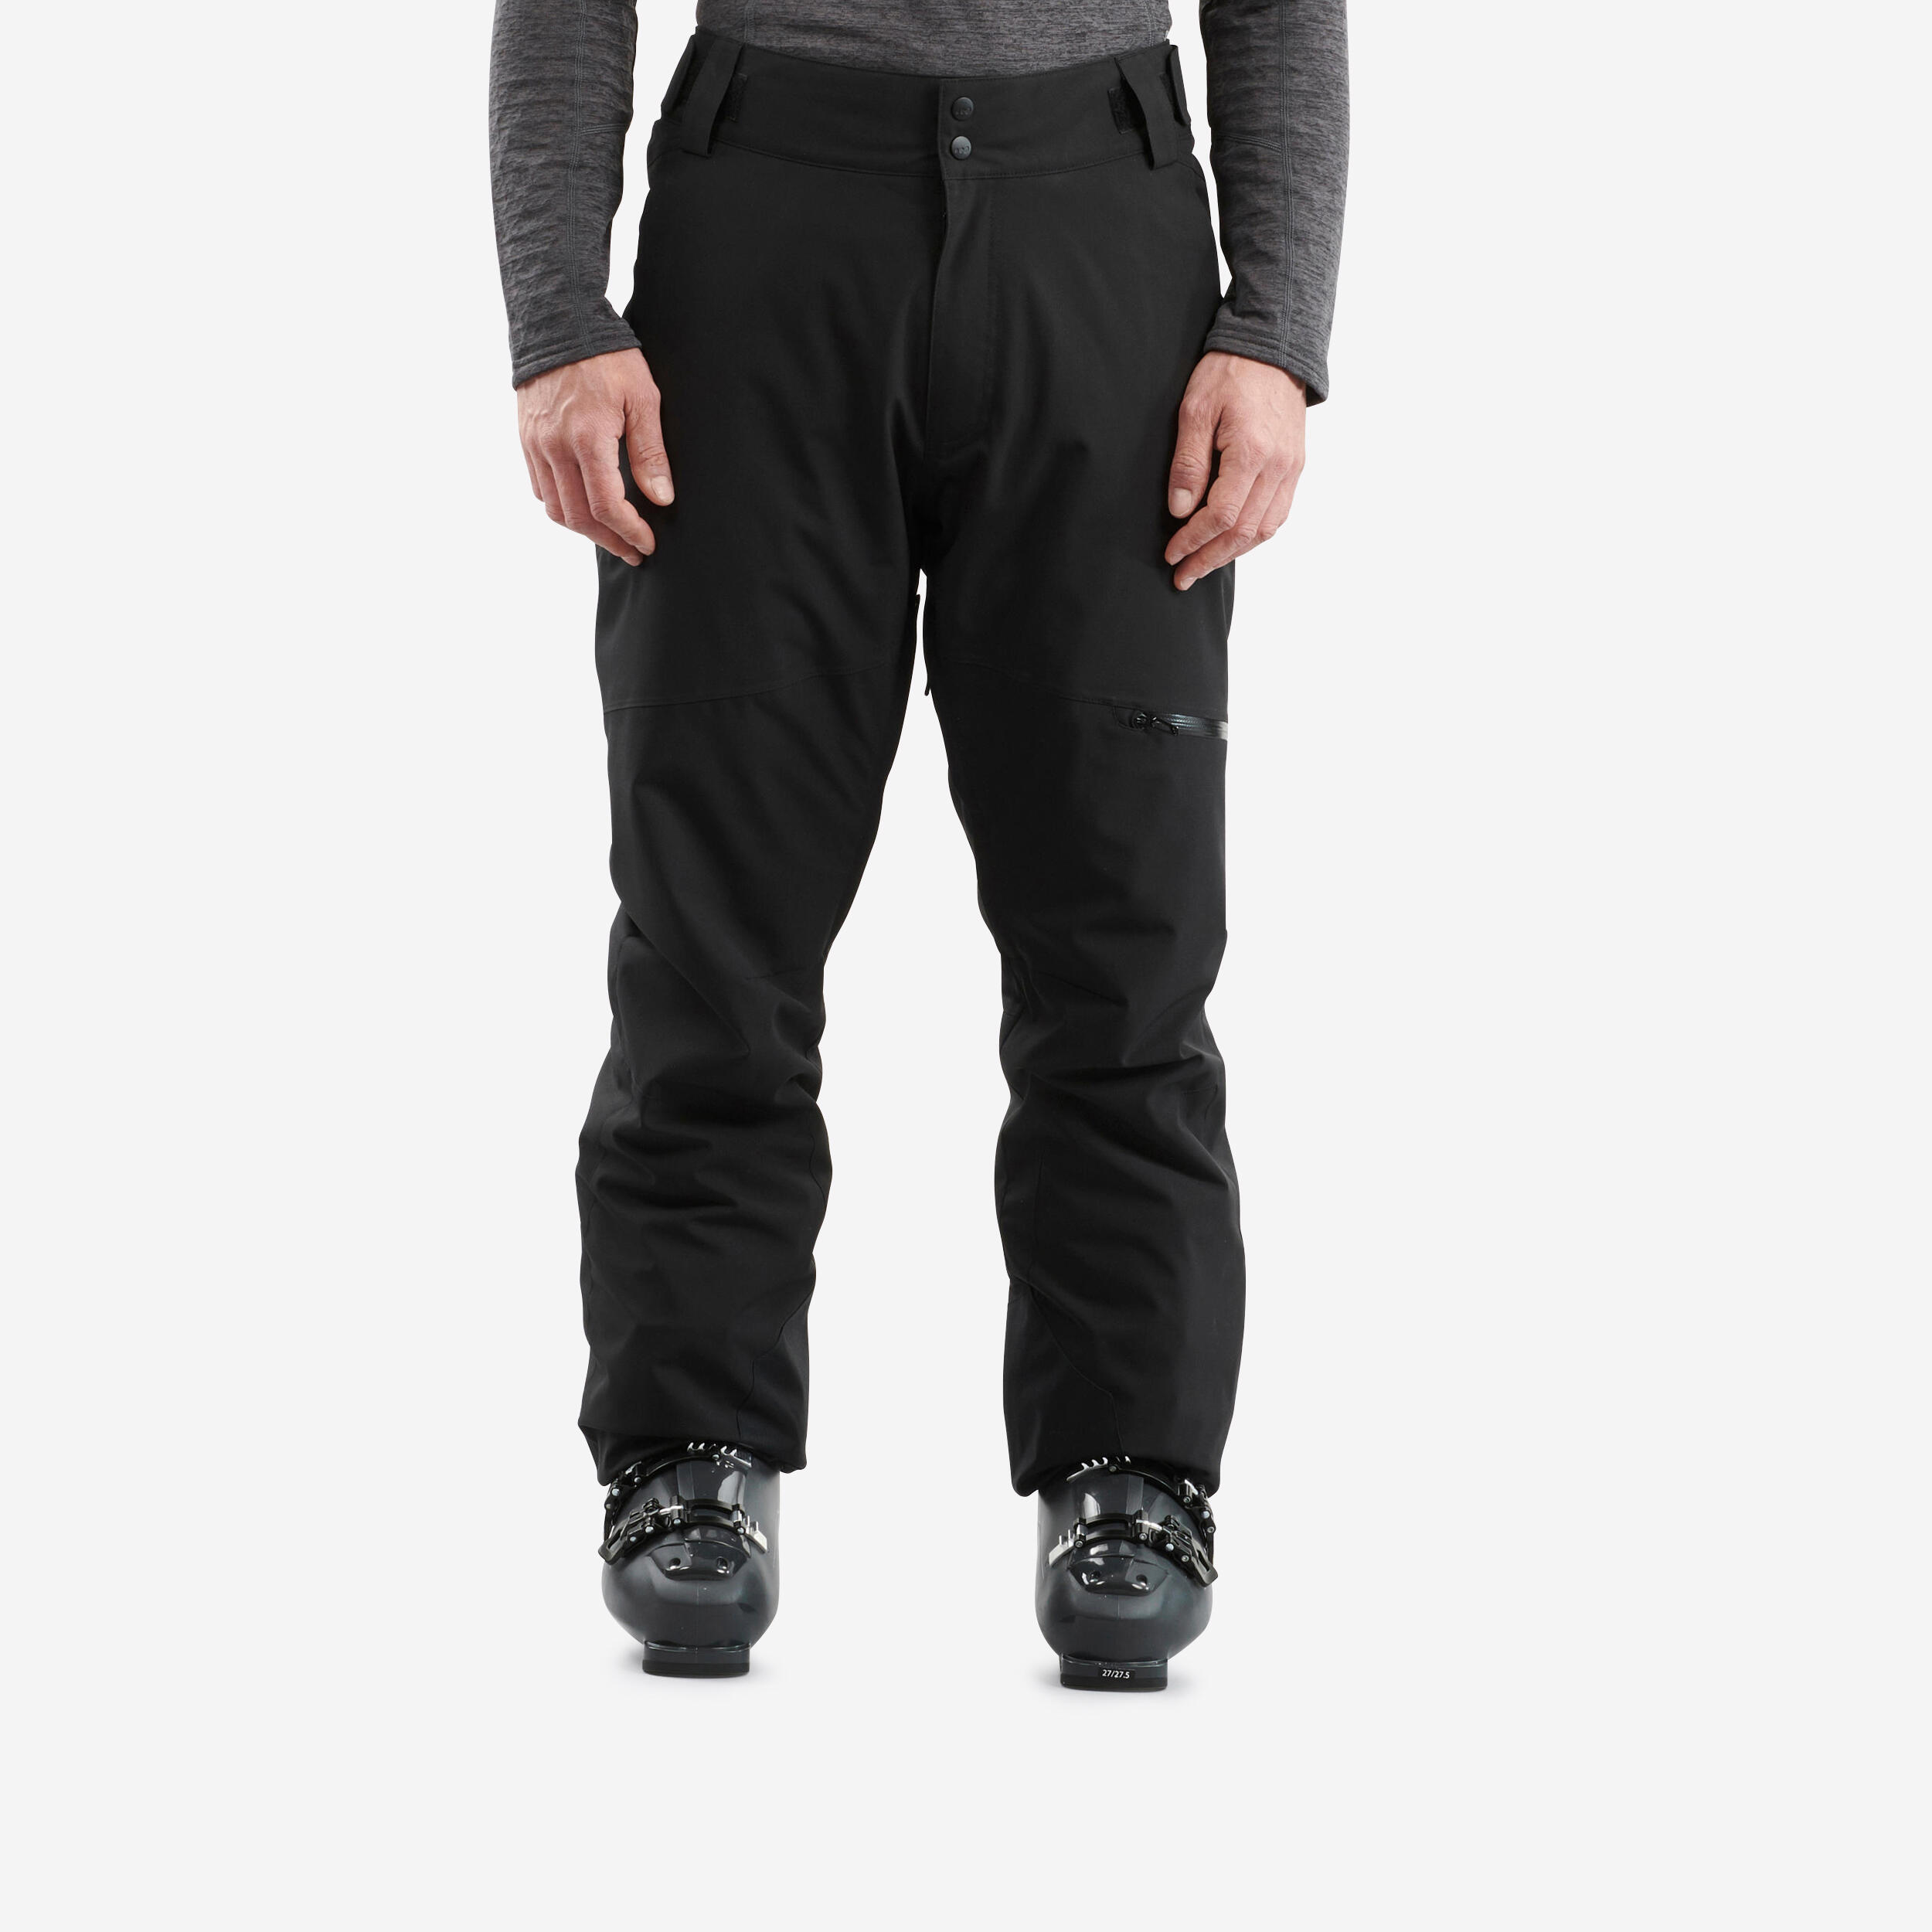 Essentials Men's Waterproof Insulated Ski Pant, Black